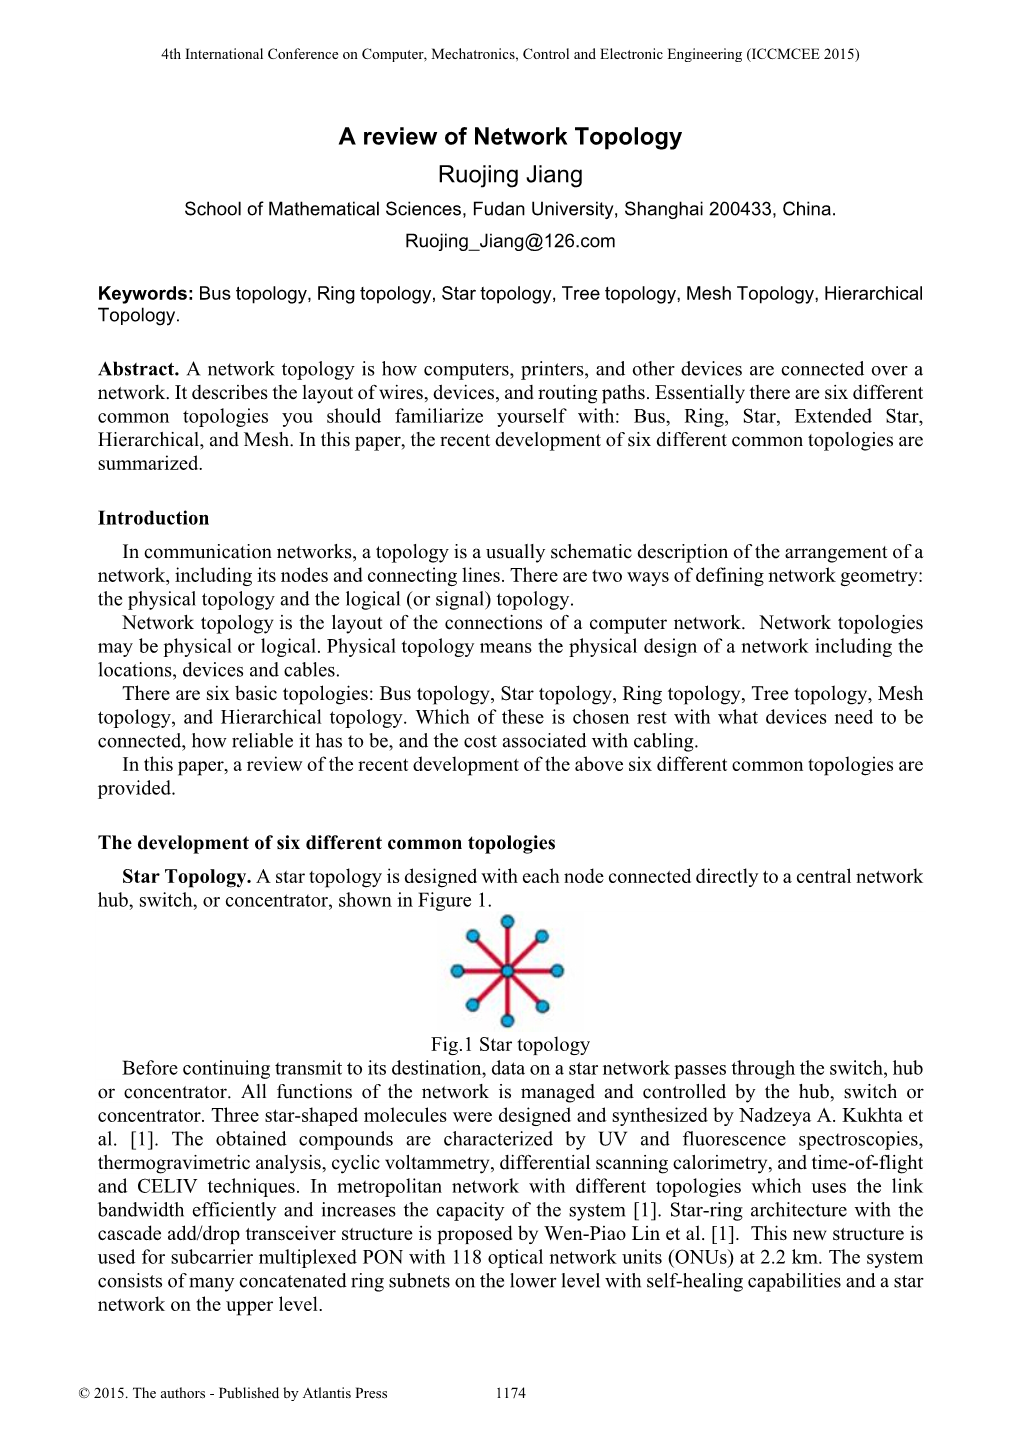 A Review of Network Topology Ruojing Jiang School of Mathematical Sciences, Fudan University, Shanghai 200433, China